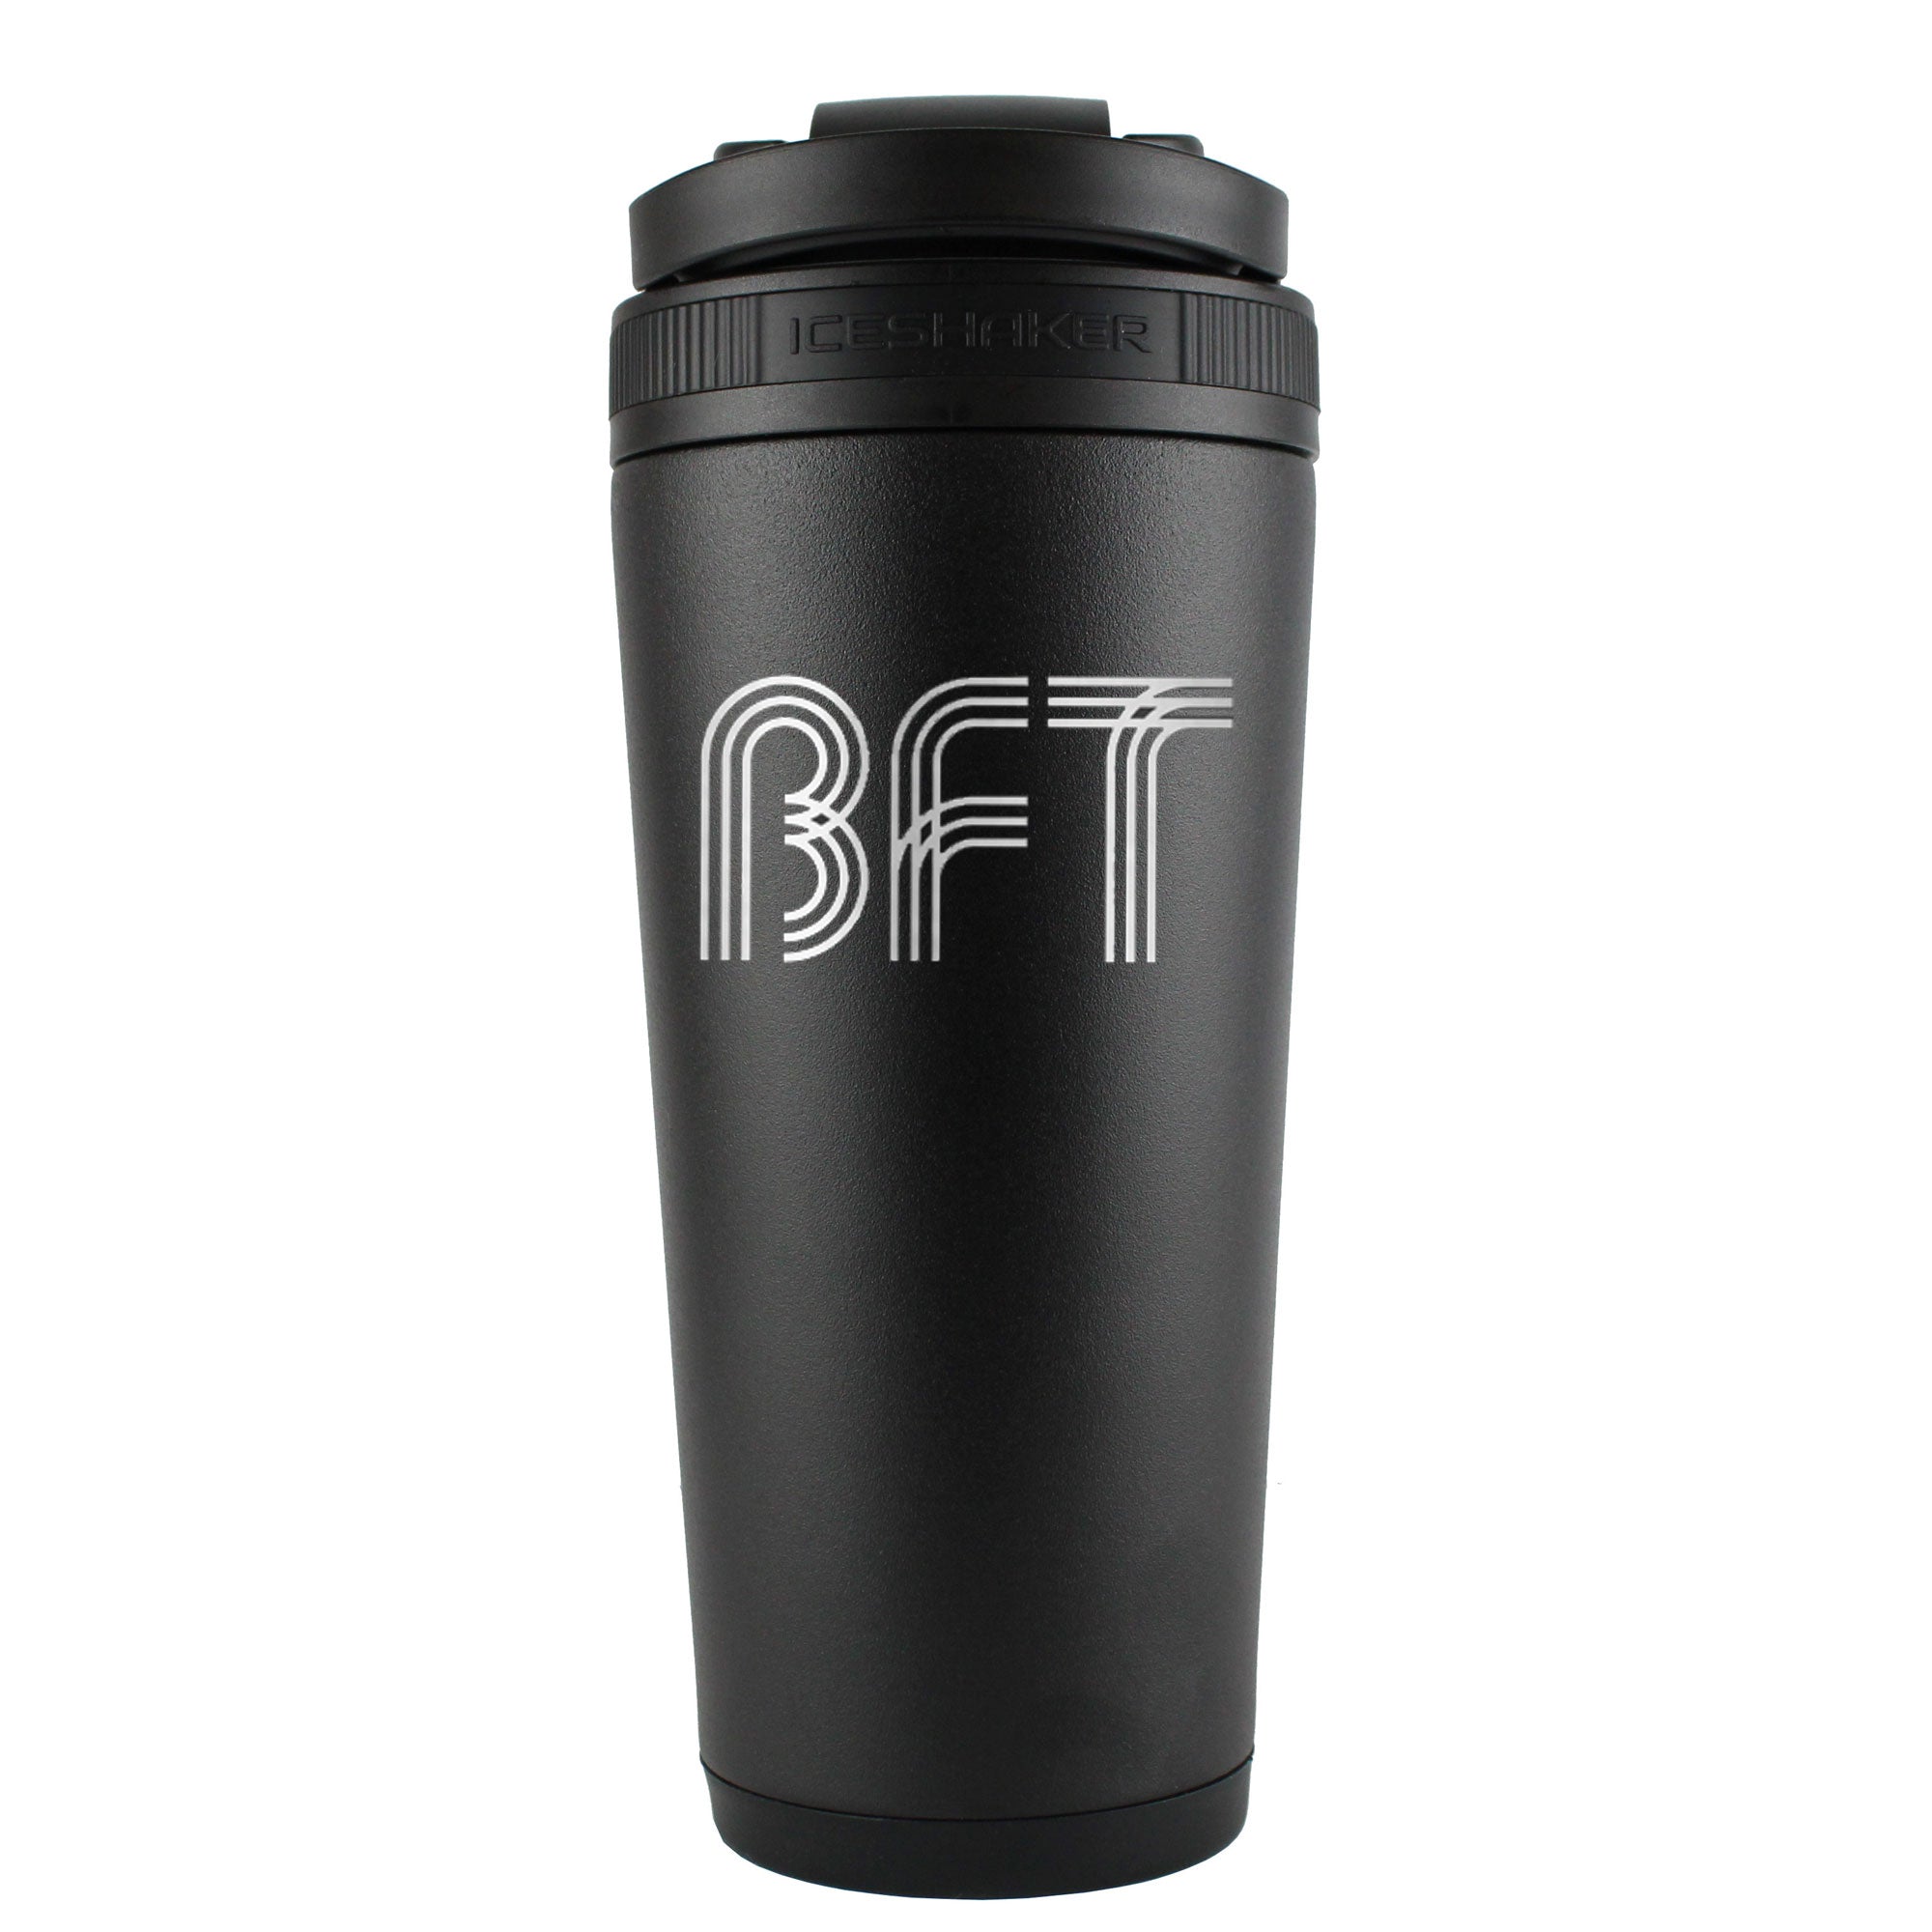 BFT 26oz Ice Shaker - Black